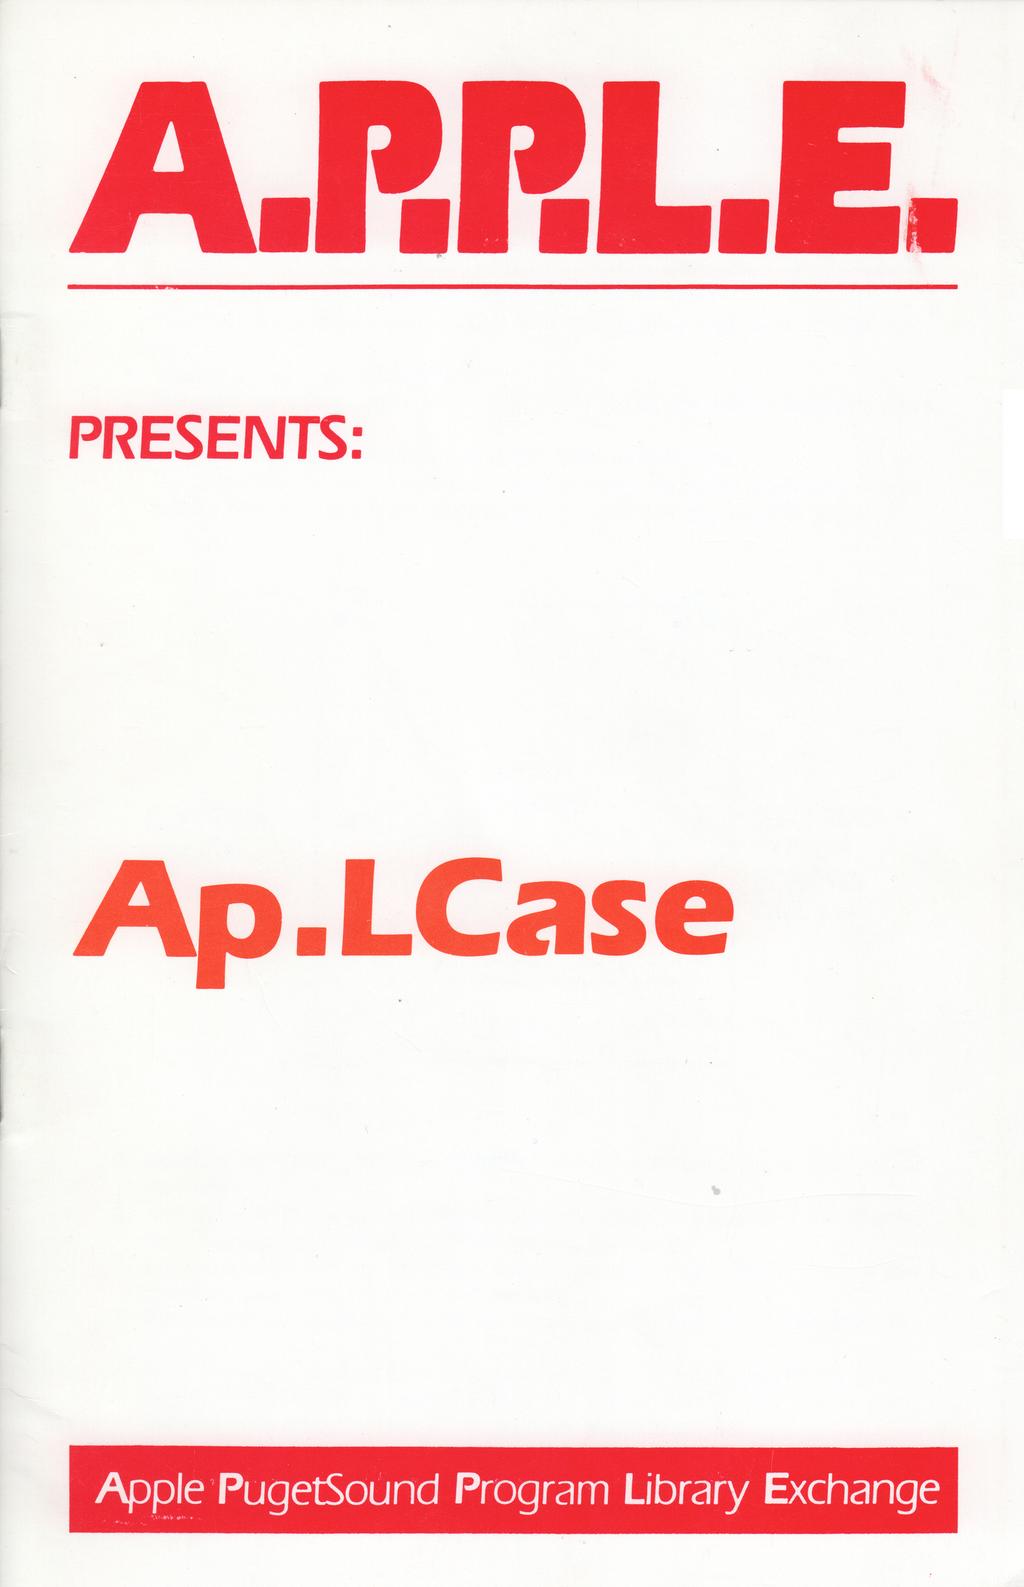 PRESENTS: Ap.LCase App!